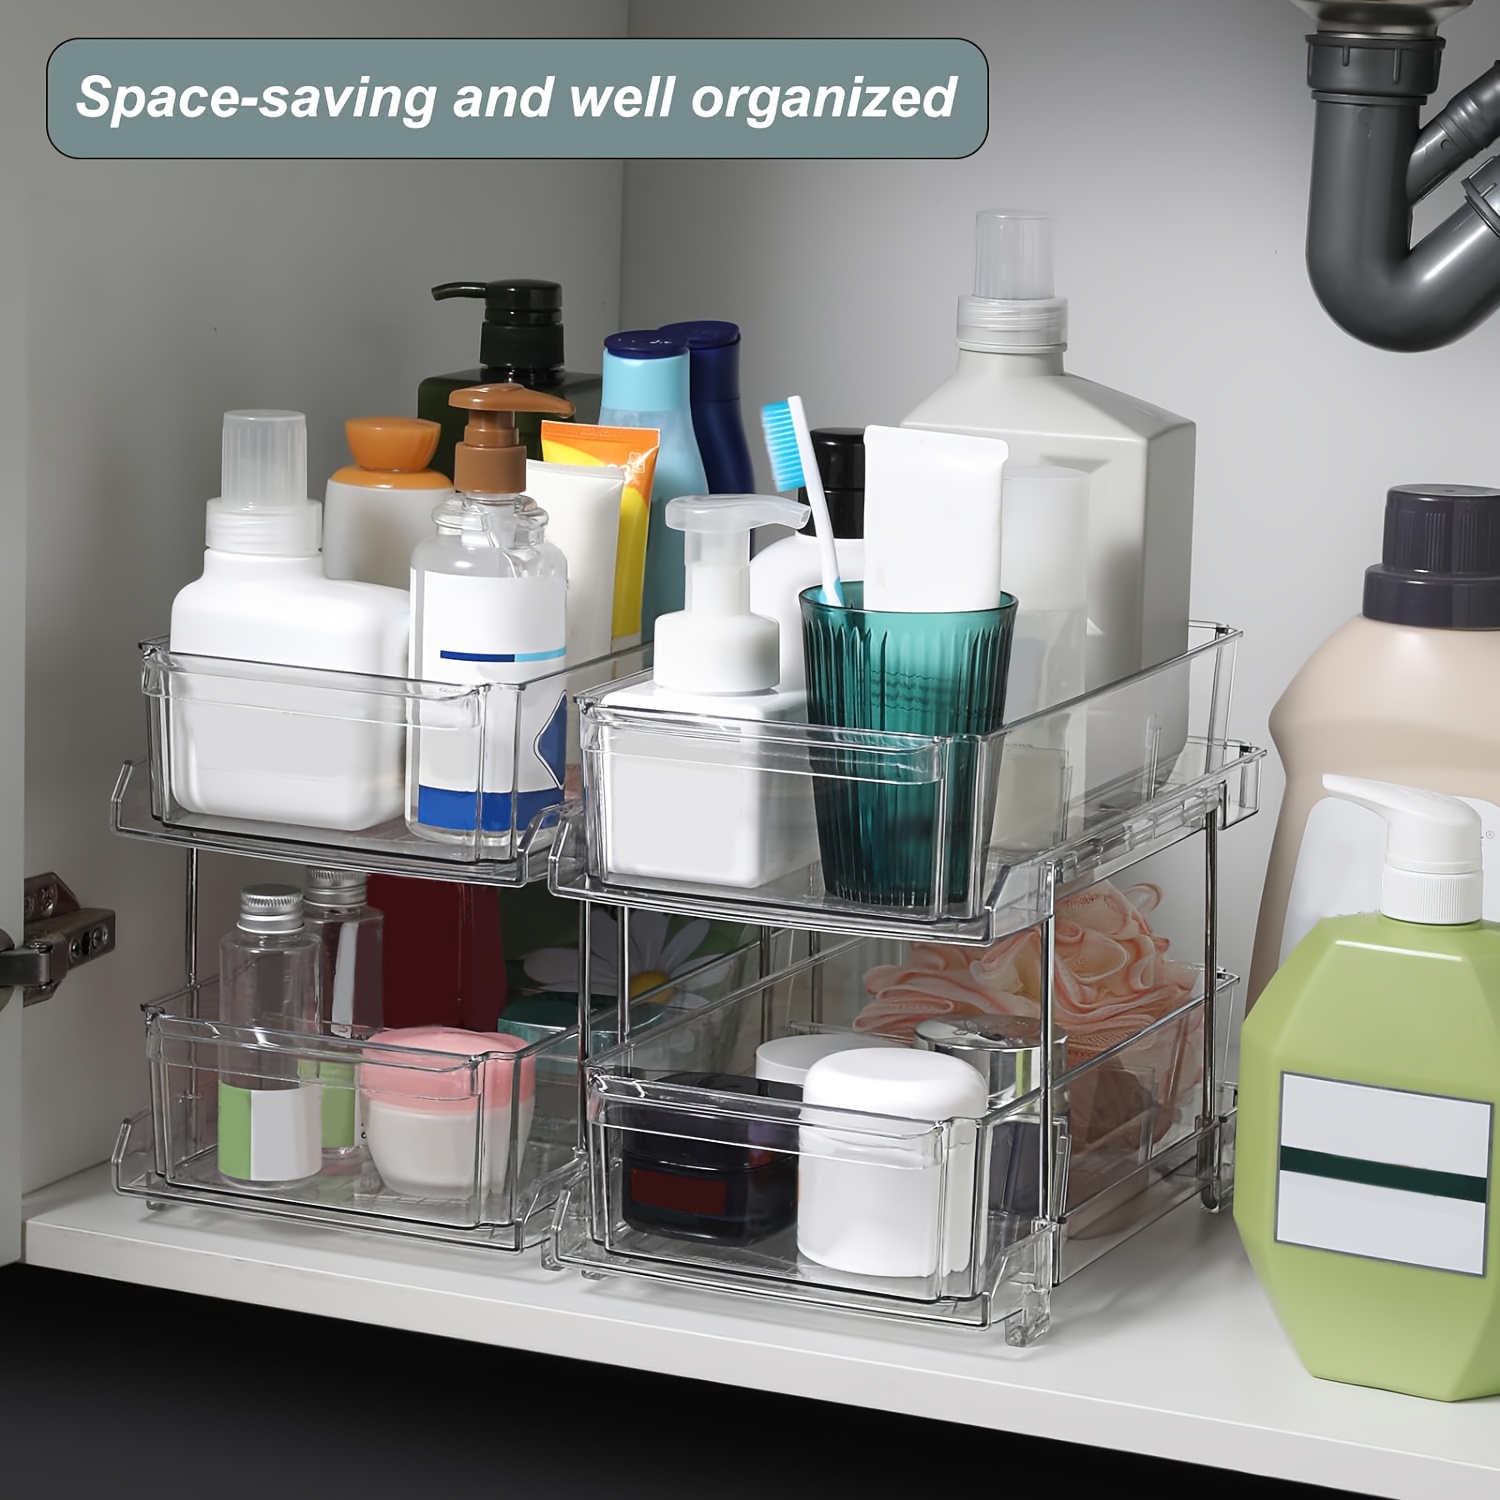 Hold N' Storage Under Sink Organizers and Storage - 2 Tier slide out C